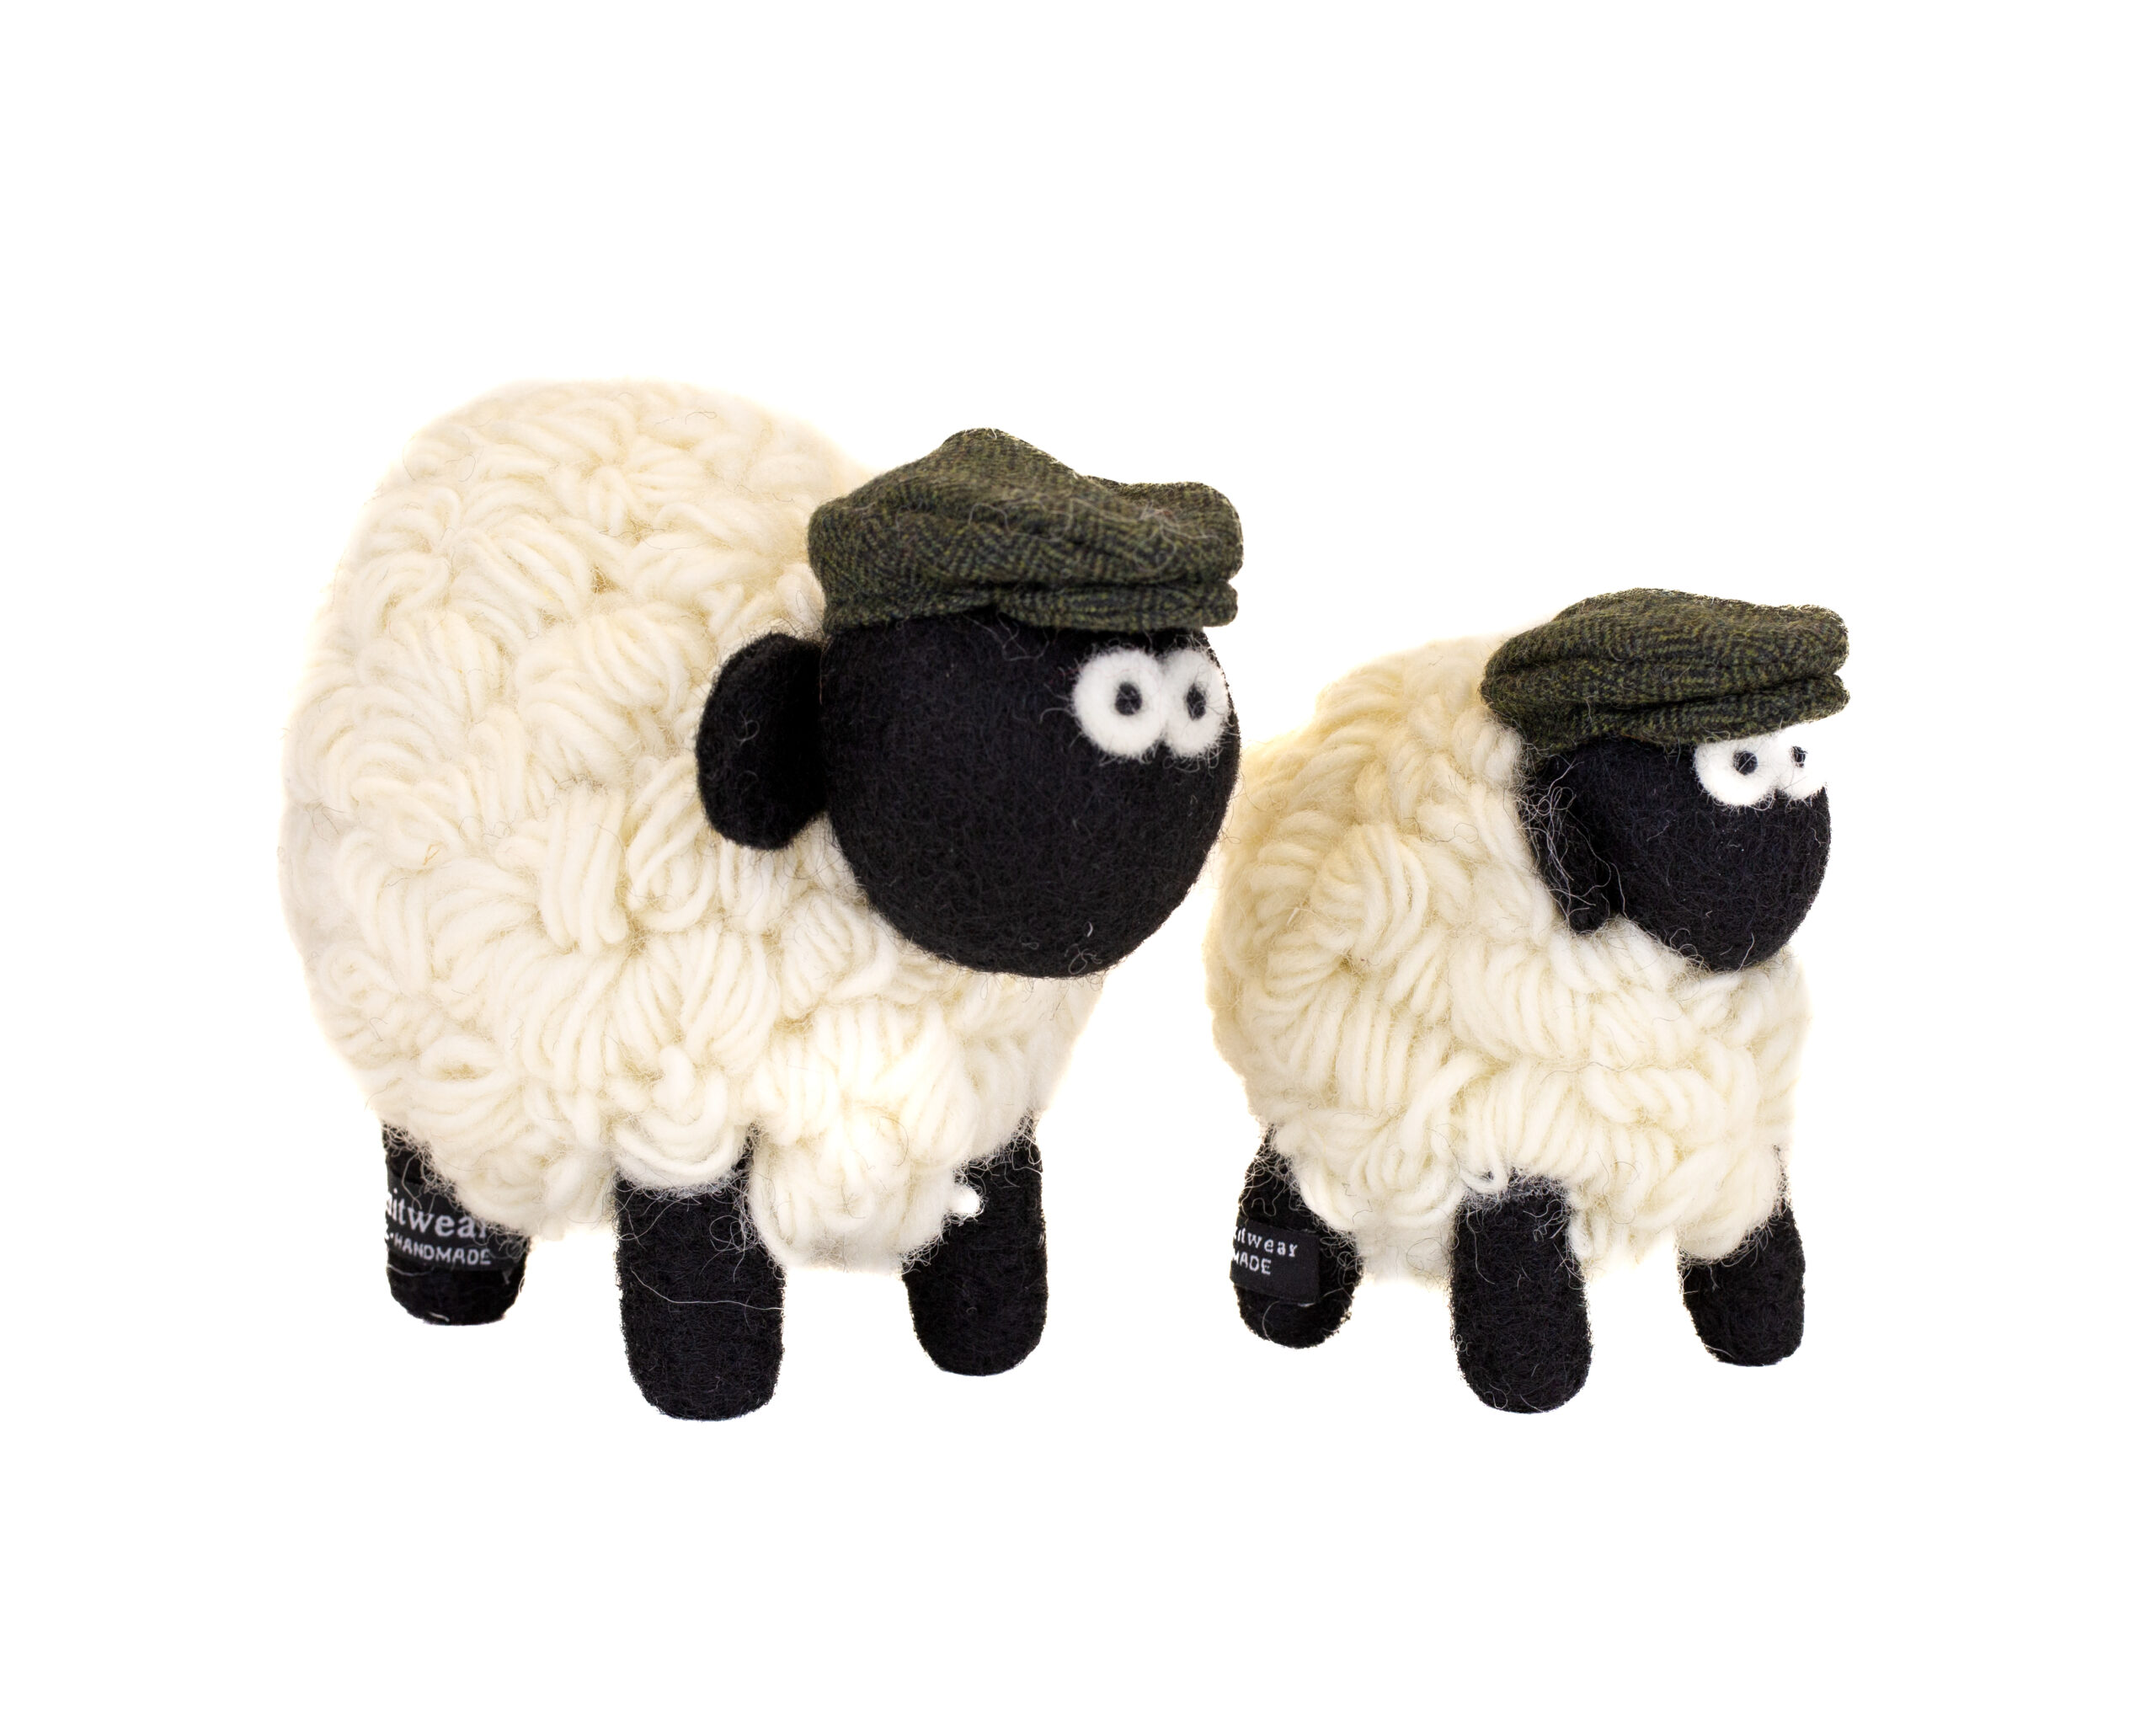 A Knit Sheep -A Knit Sheep